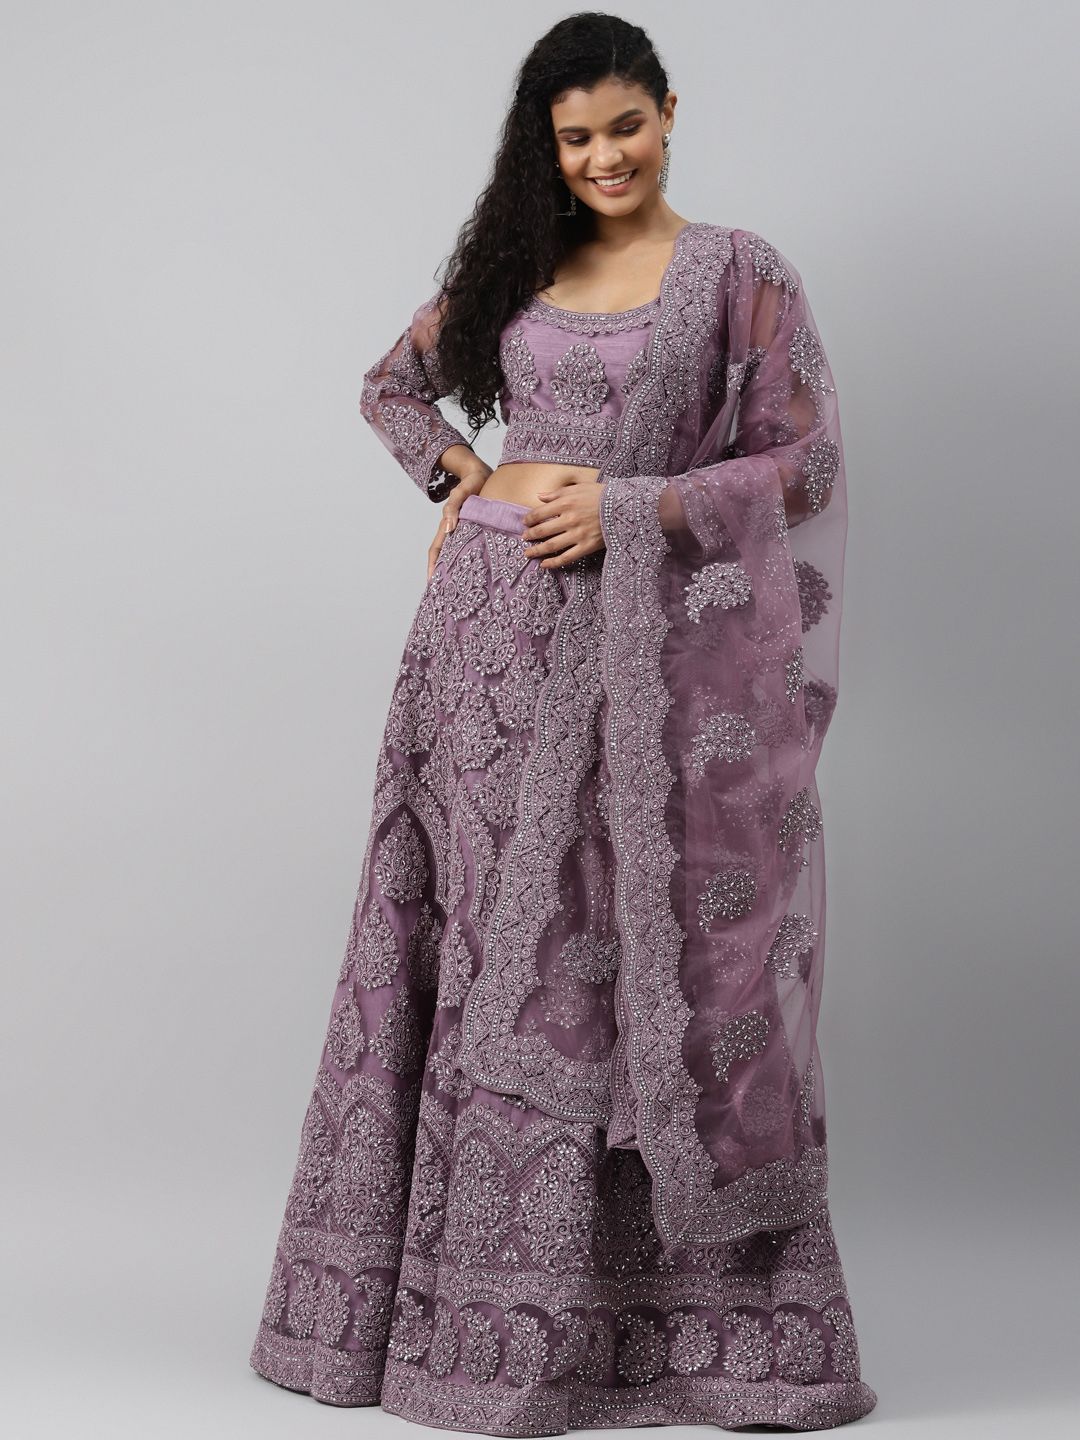 Readiprint Fashions Purple Semi-Stitched Lehenga & Blouse with Dupatta Price in India